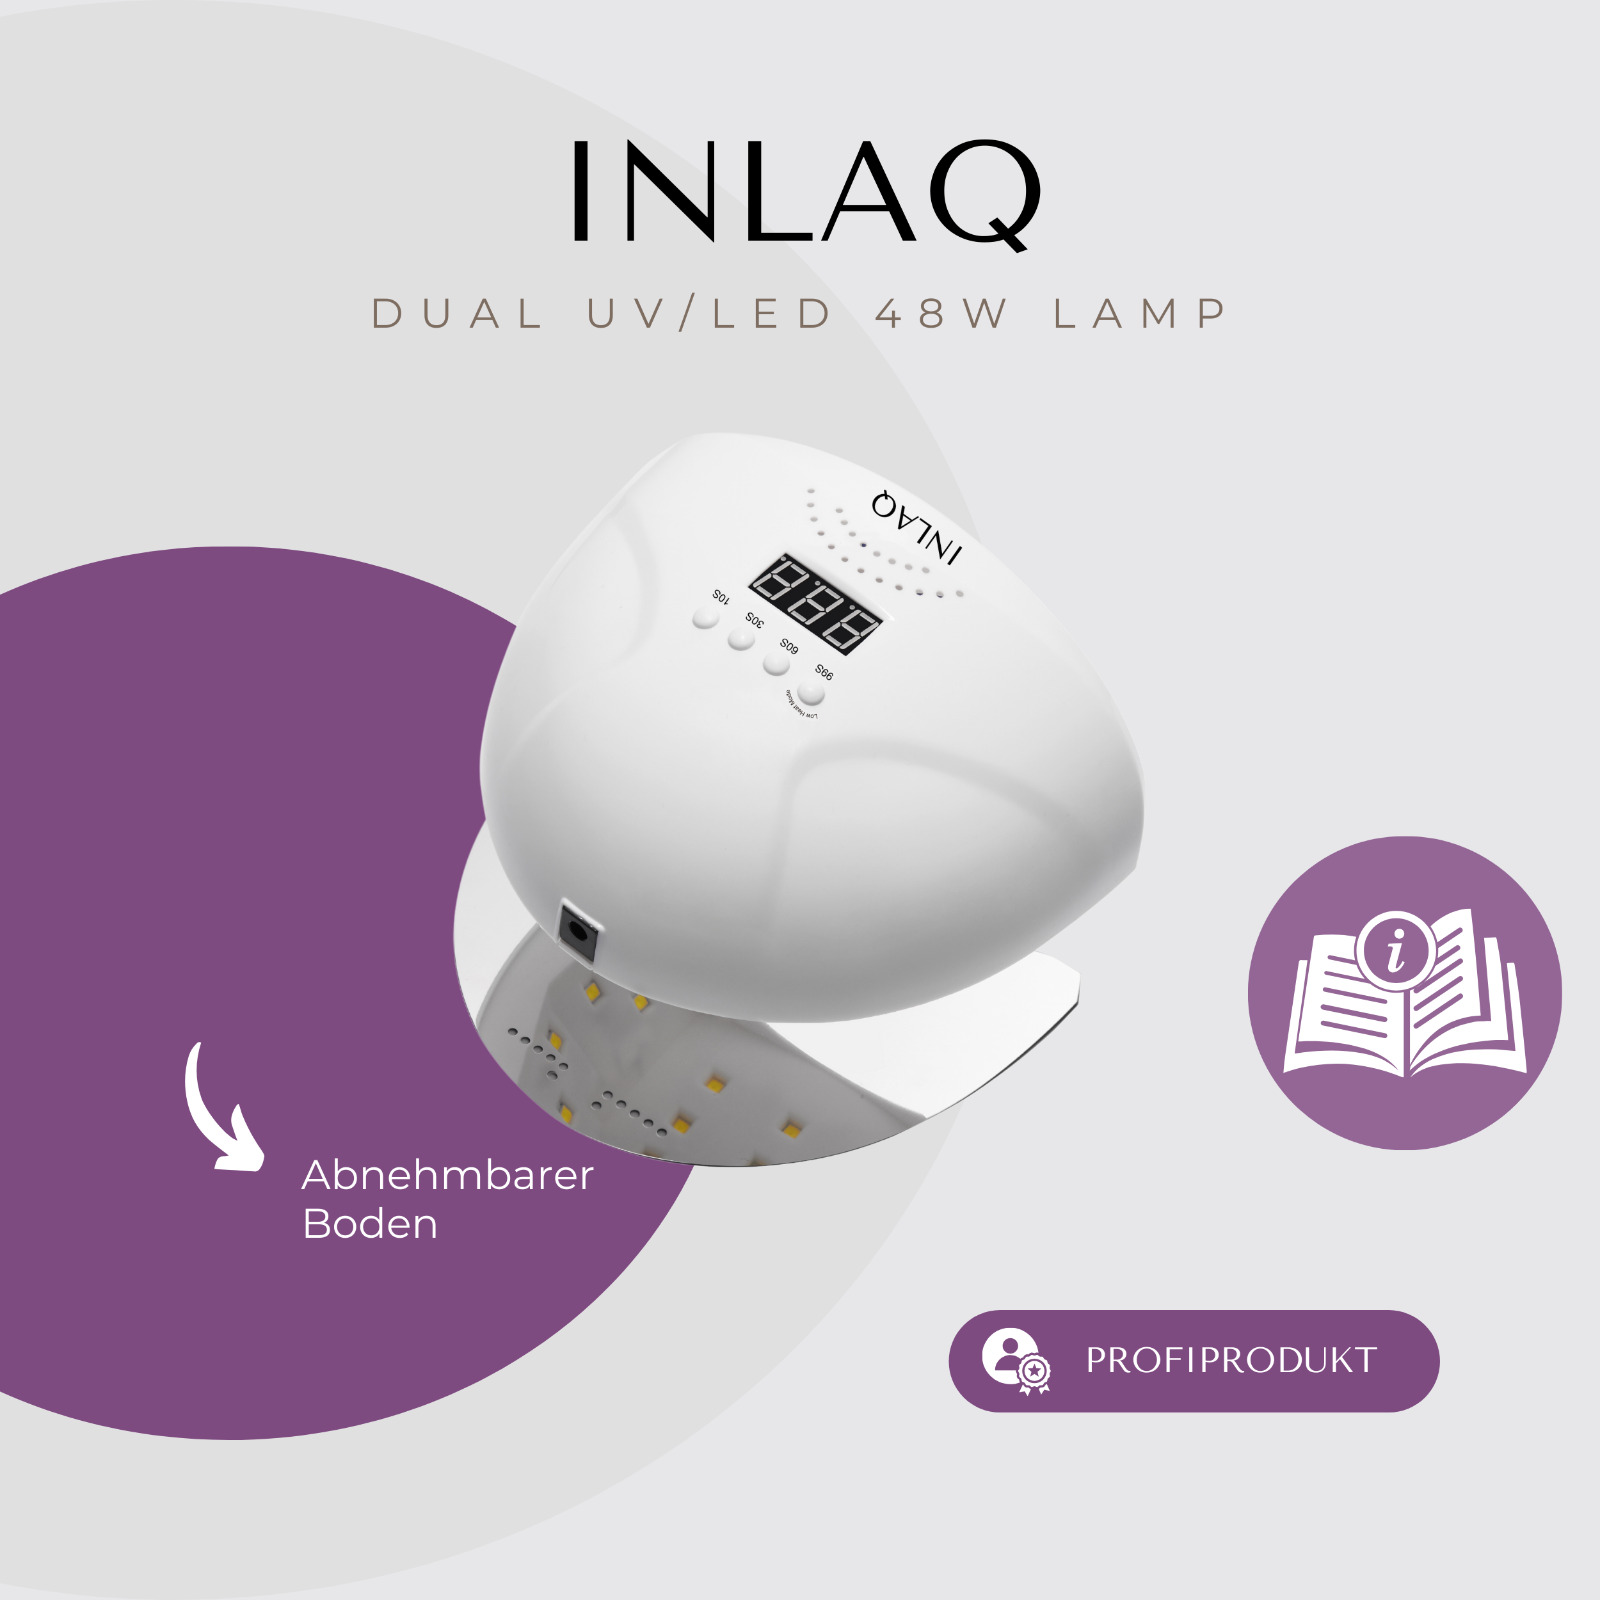 LAQ Dual UVLED Hybrid-Nagellampe 48W - mit automatischem Sensor